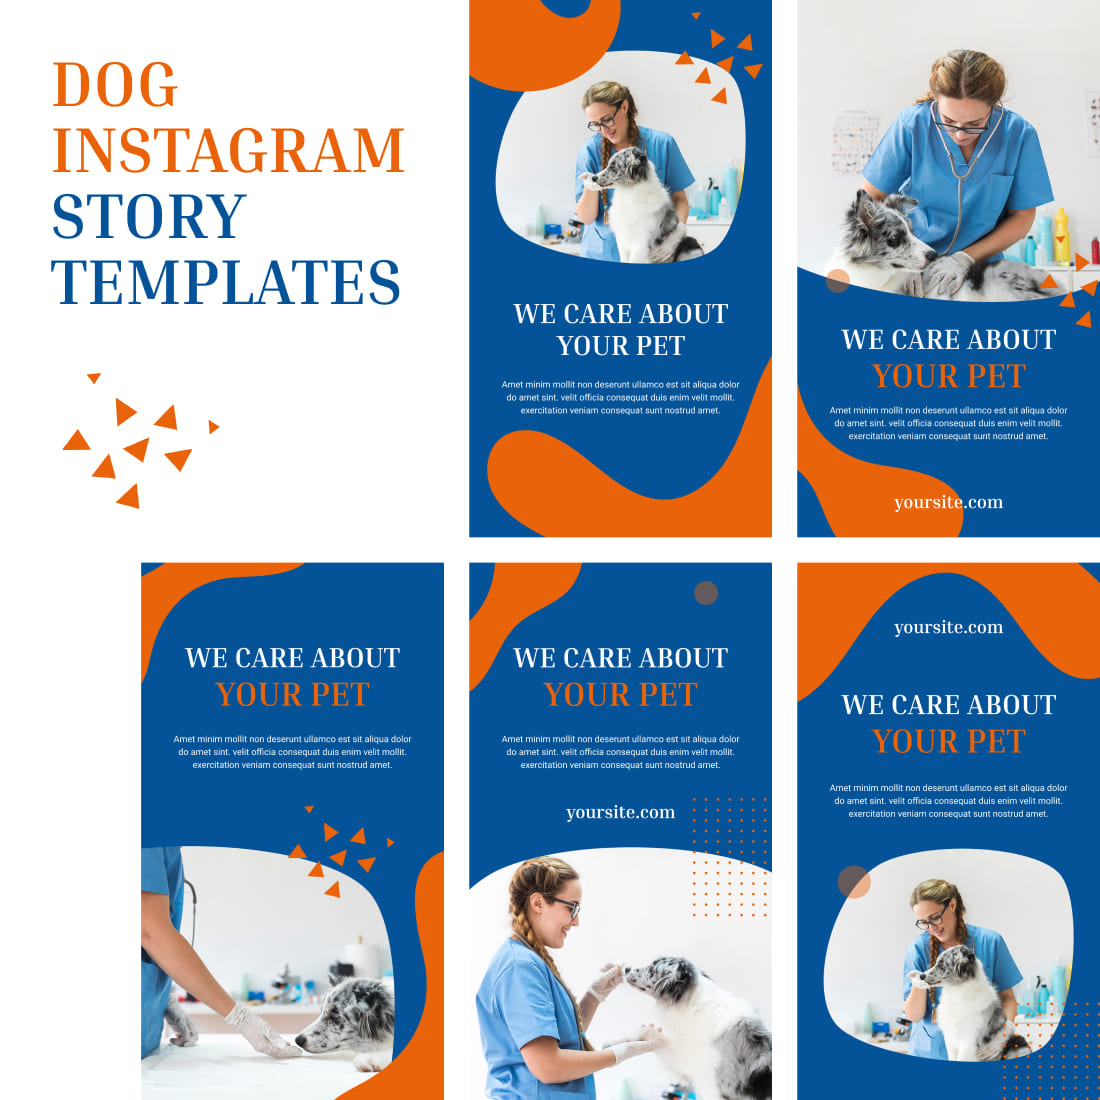 5 dog instagram story templates.